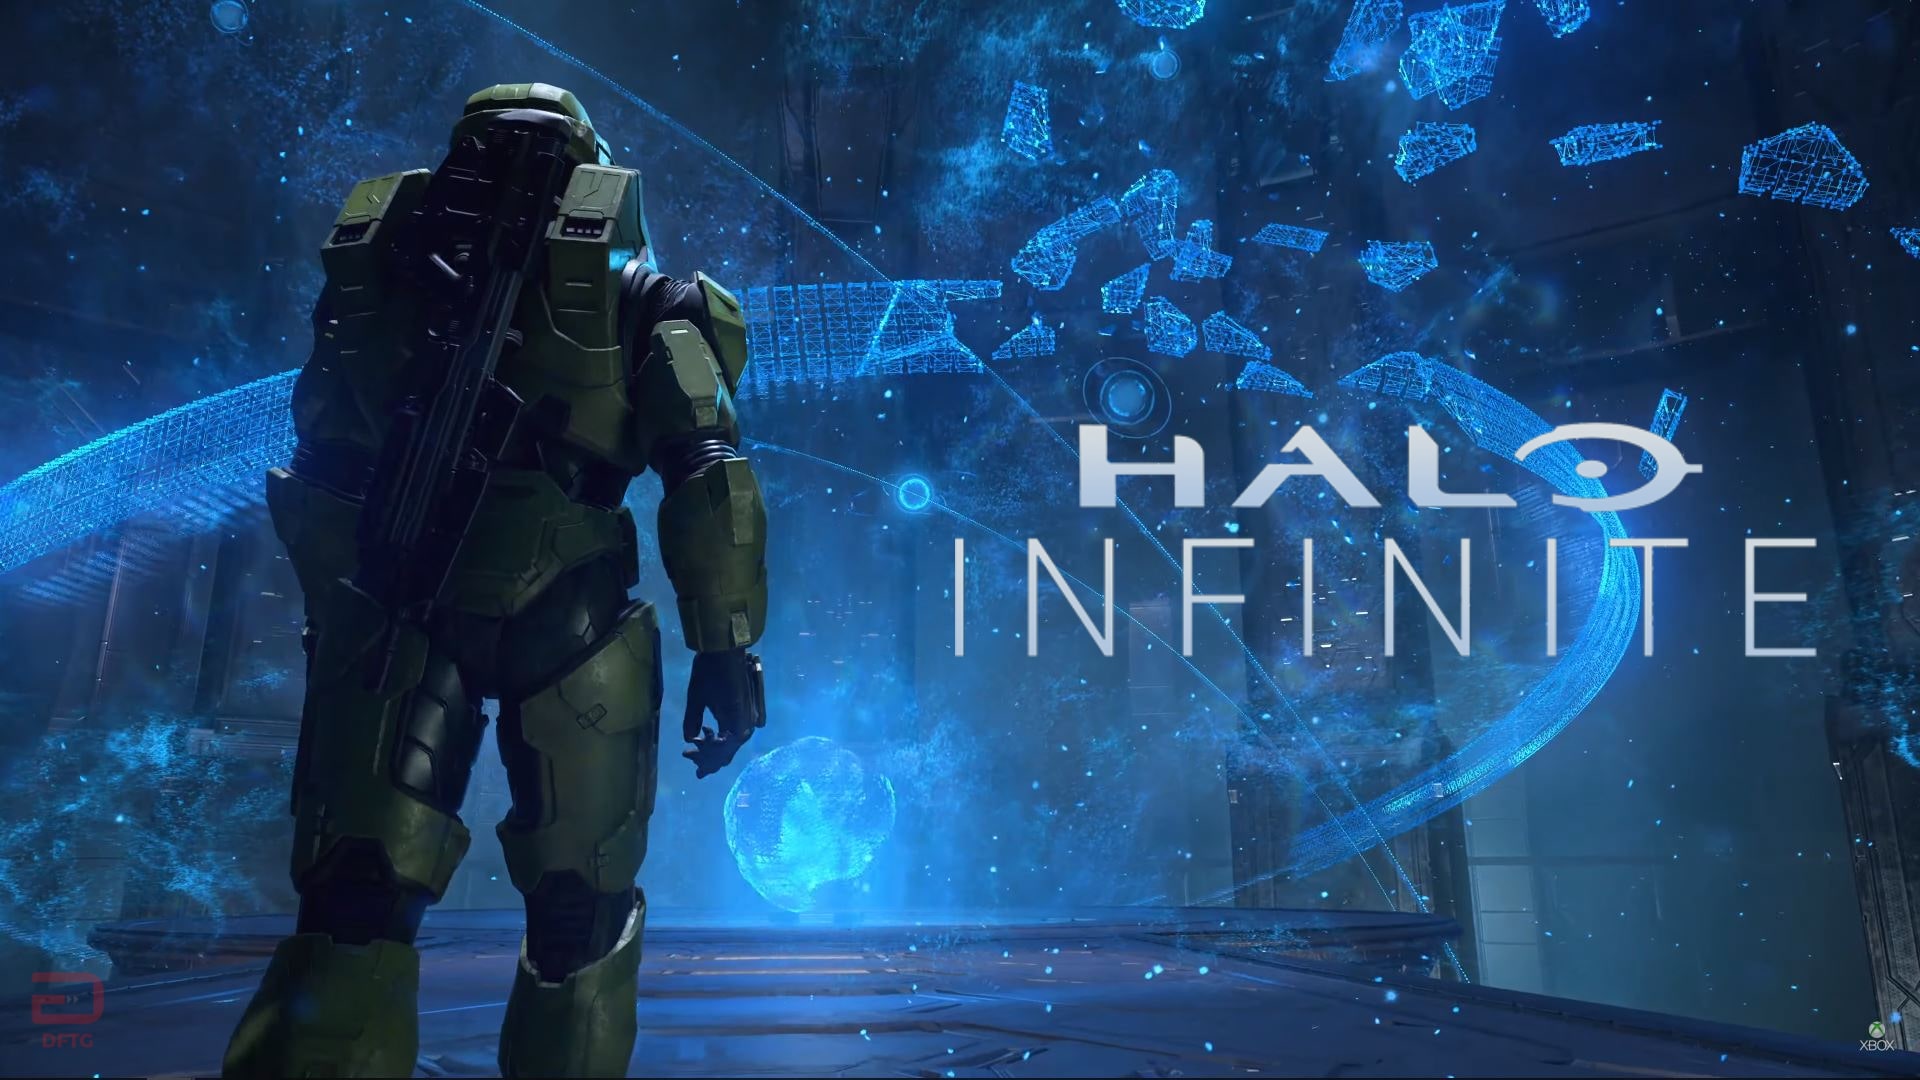 Halo Infinite HD Wallpaper - KoLPaPer - Awesome Free HD ...